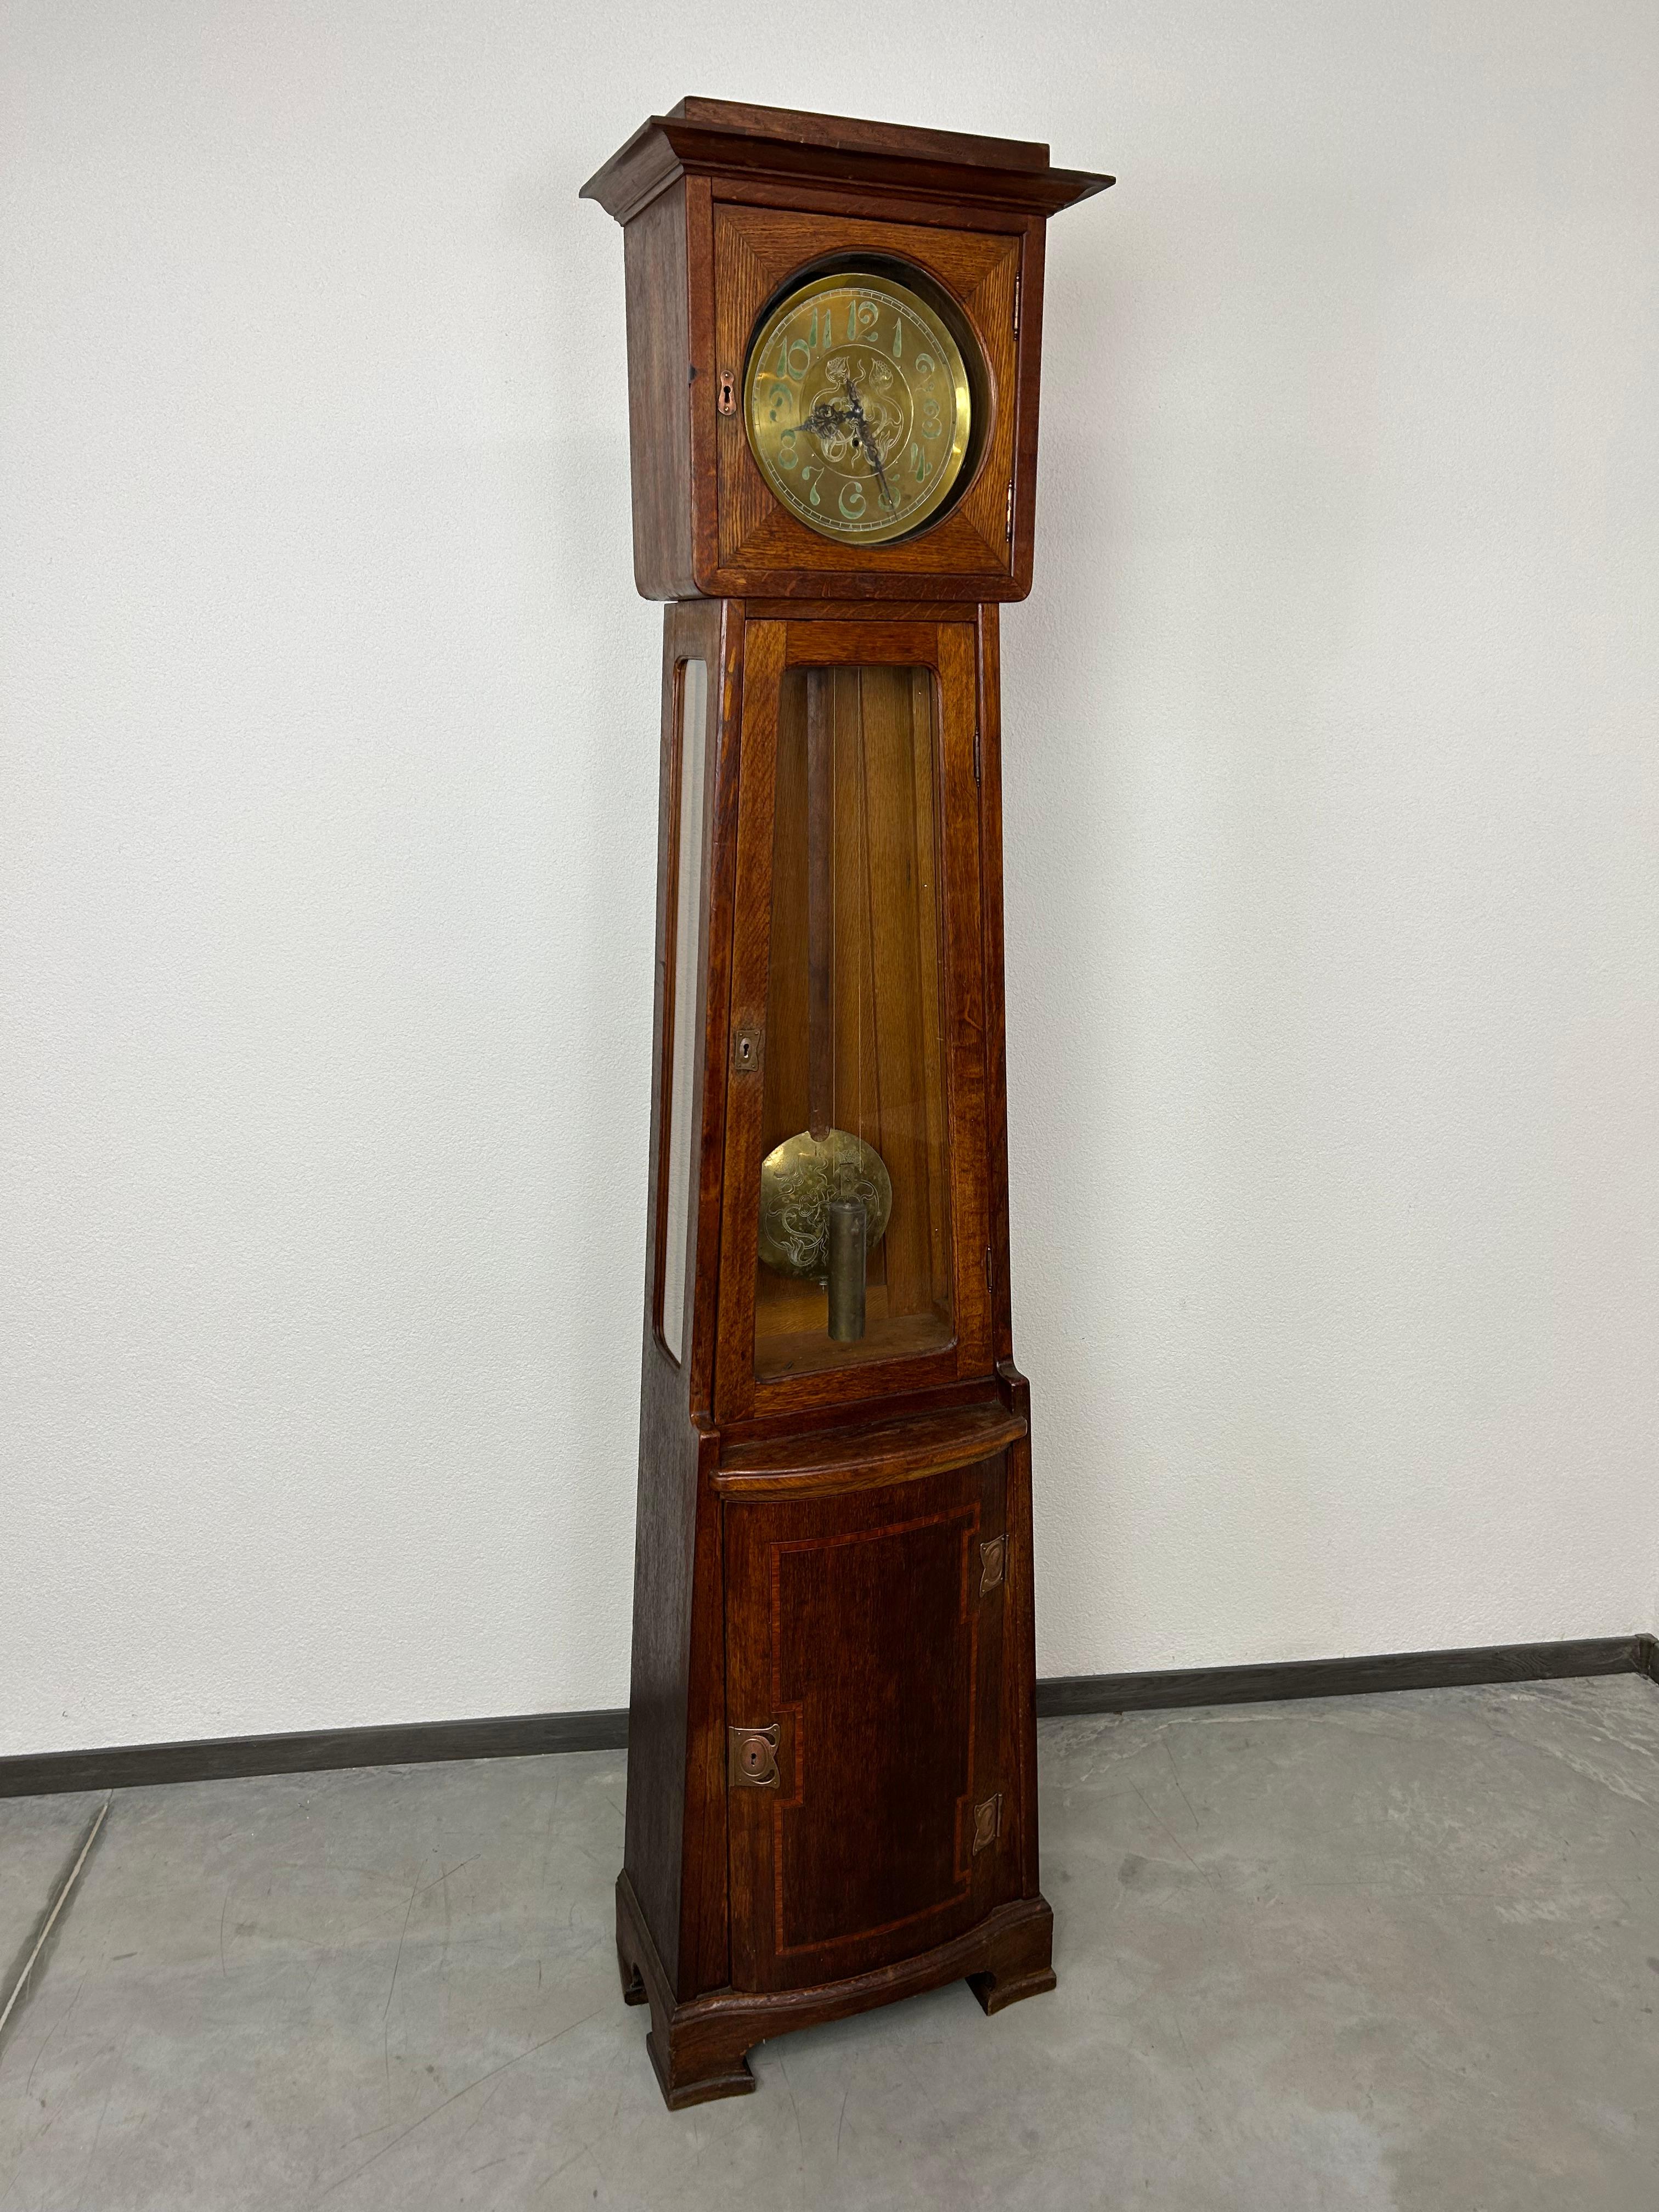 Jugendstil longcase clock in very good original condition, working.